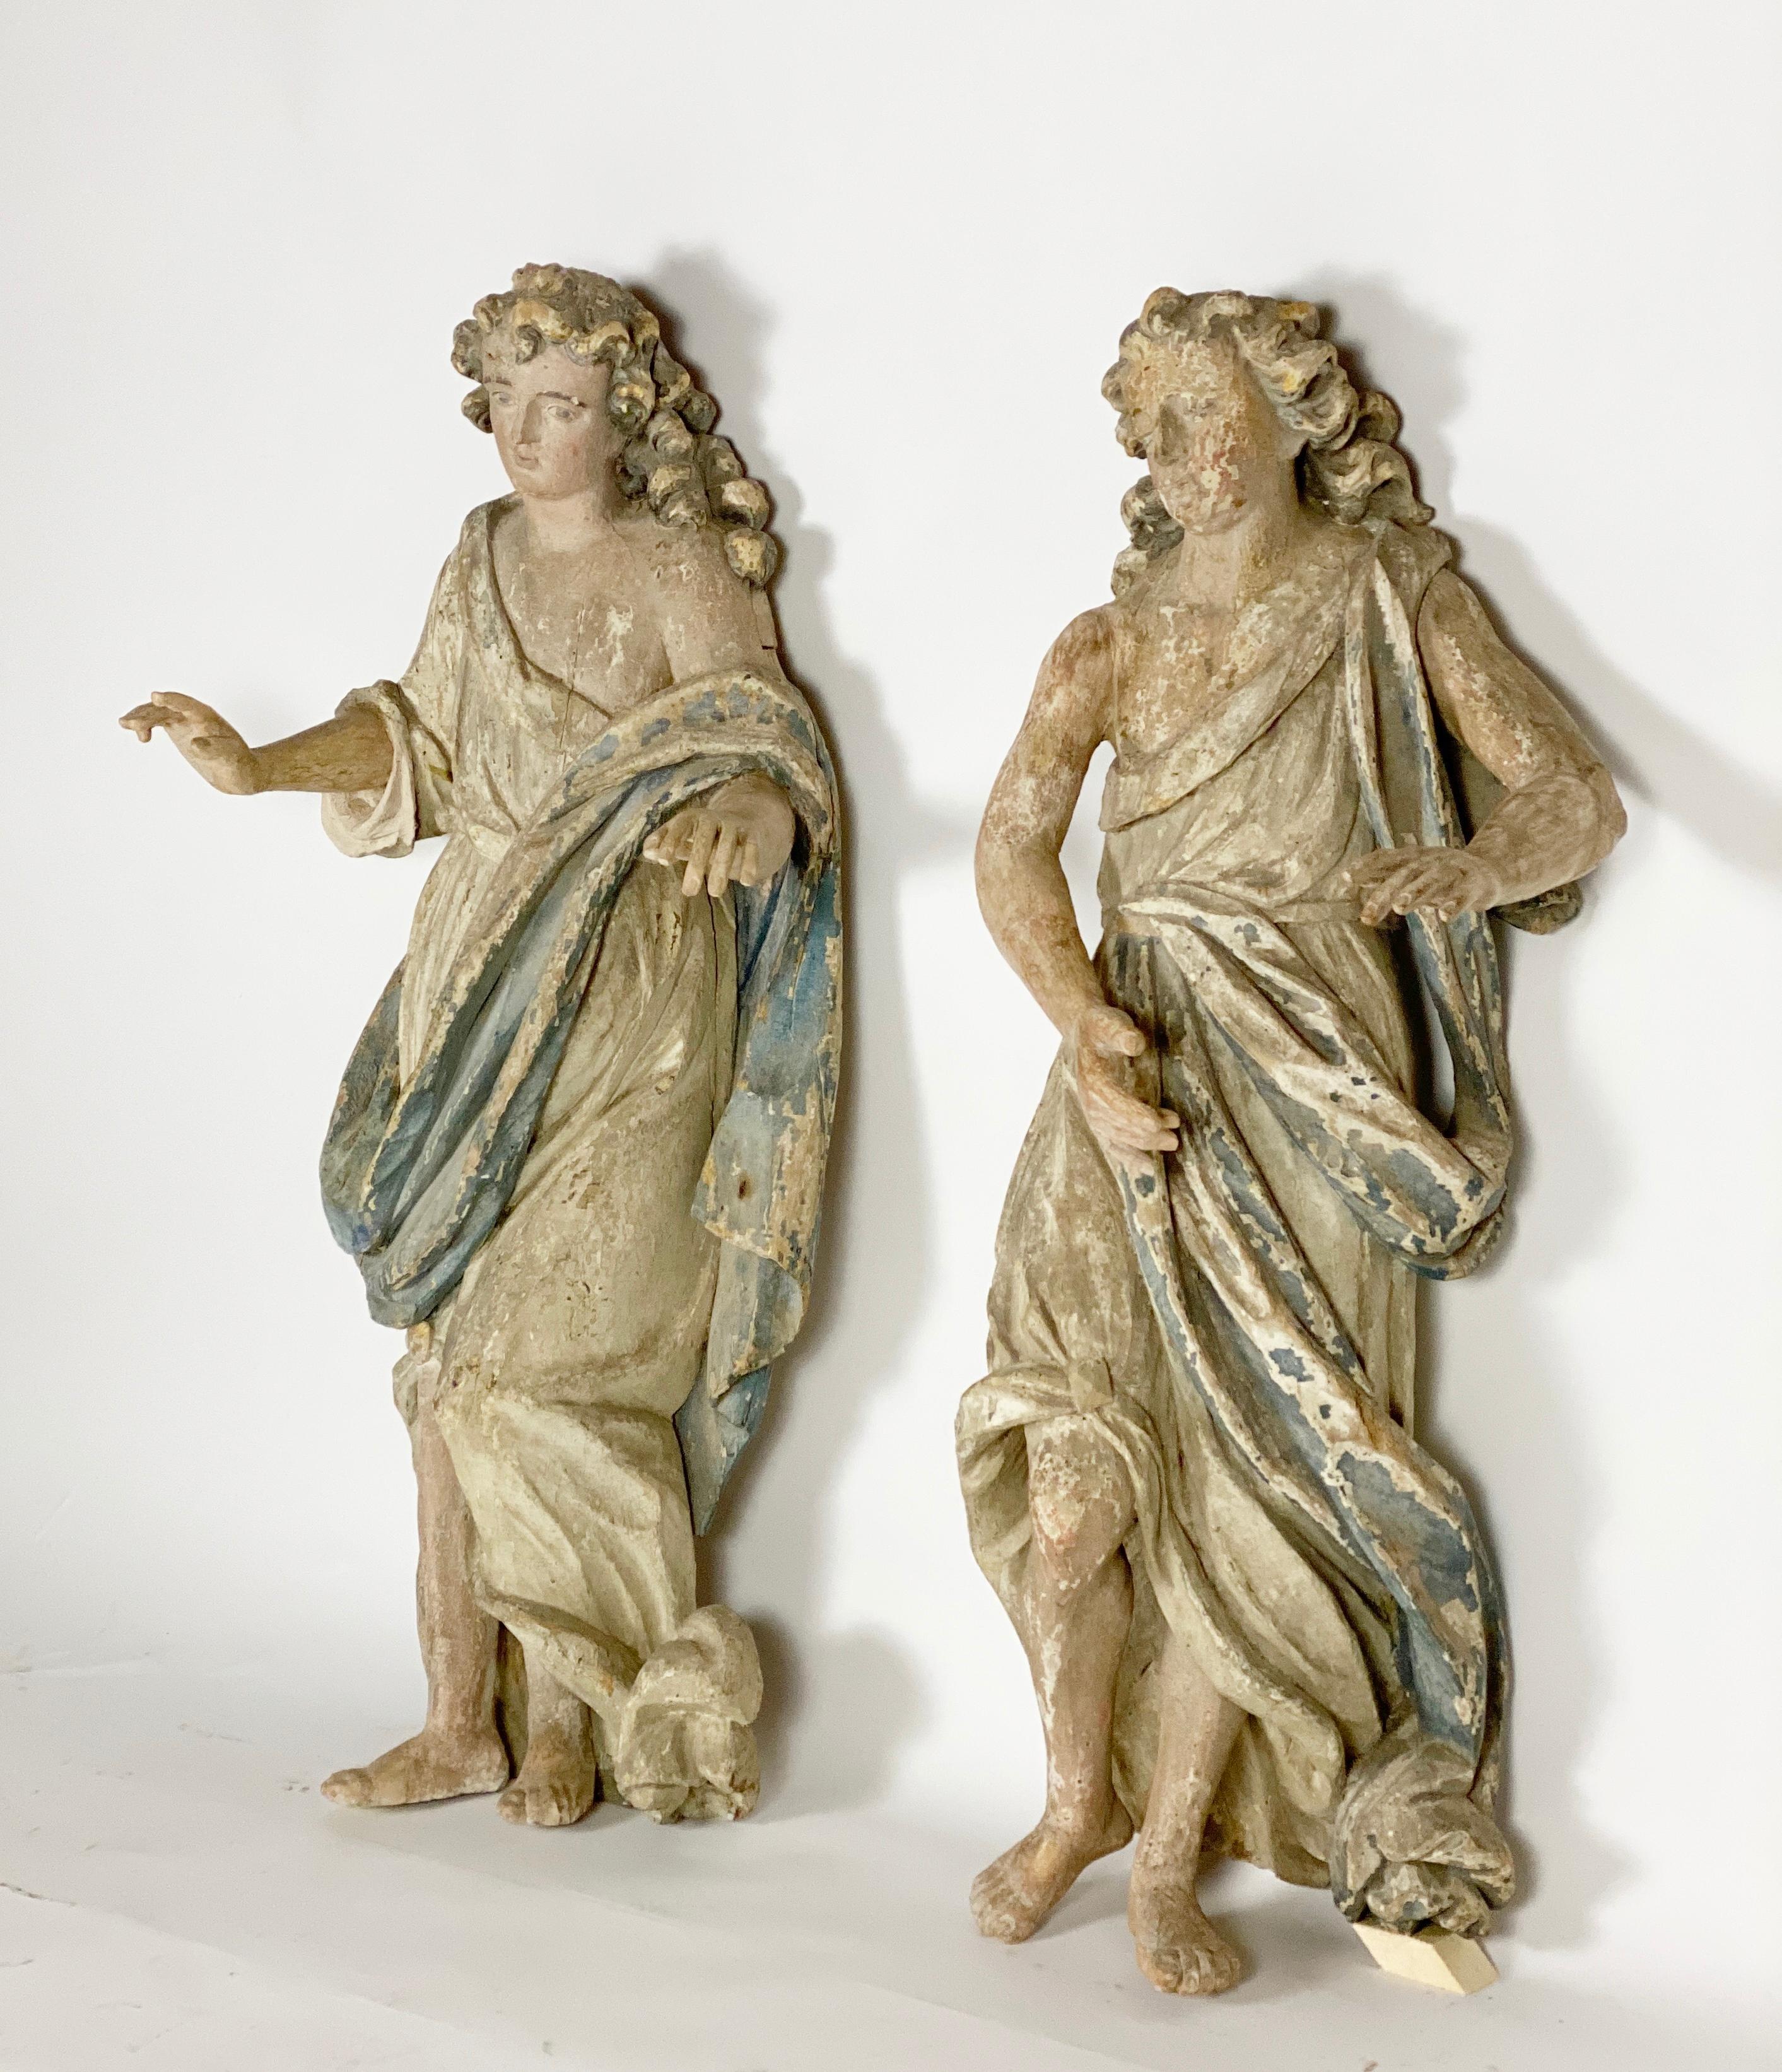 Engelspaar aus Holz - Frankreich, 18. Jahrhundert.